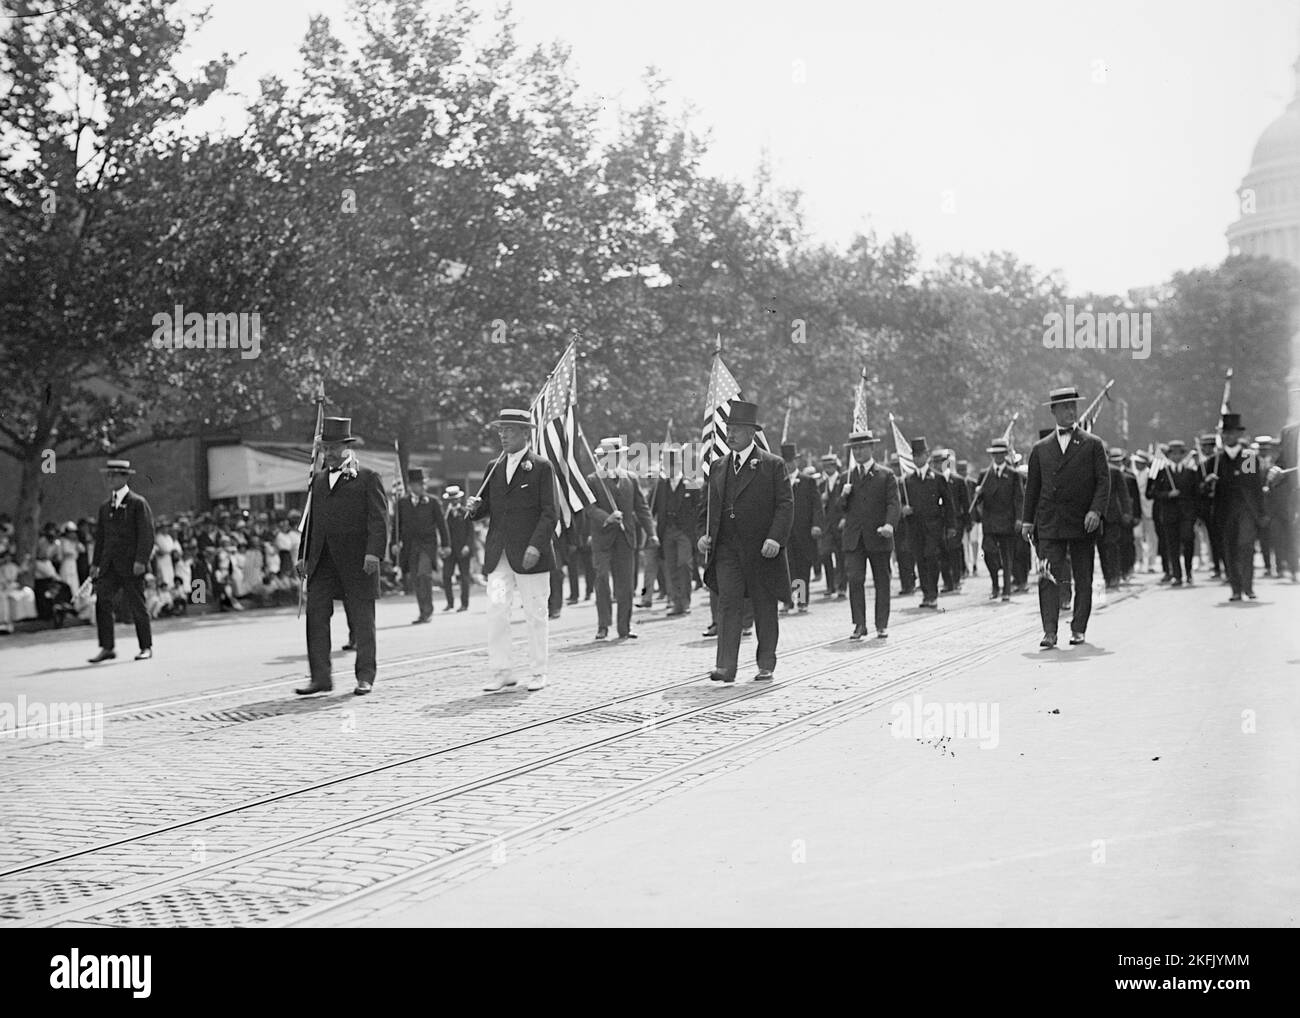 Preparedness Parade - President Wilson, William F. Gude, And Randolph Kauffmann Leading Parade; Among Those in Next Row Are: Rep. Joe Robinson And C.J. Columbus, 1916. Stock Photo